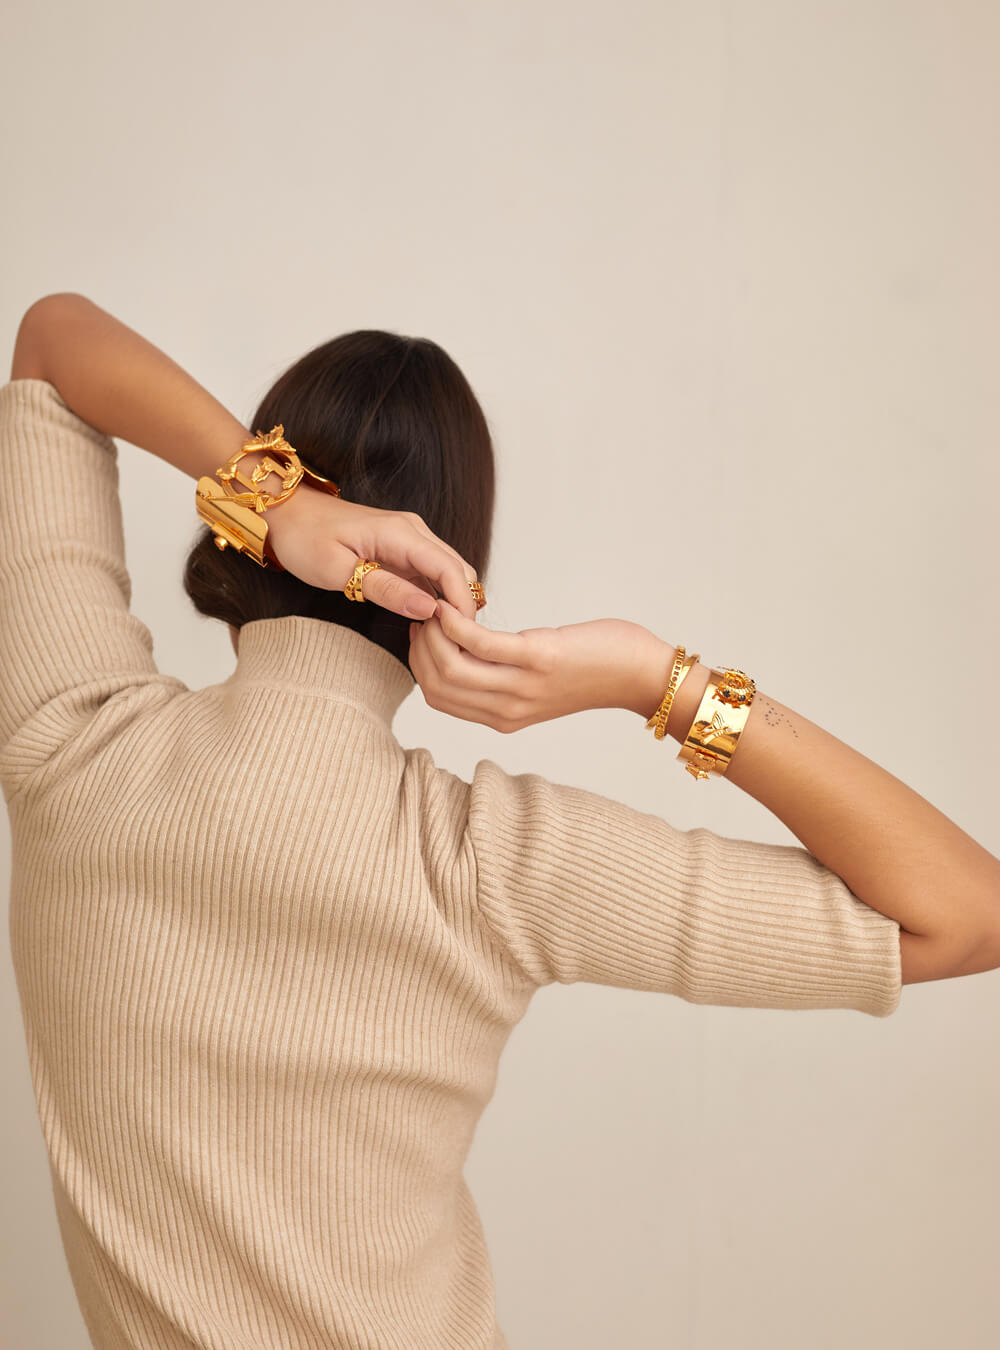 Wholesale Silicone Rubber Wristband Flexible Wrist Band Cuff Bracelet  Sports Casual Bangle For Women | Fruugo NO